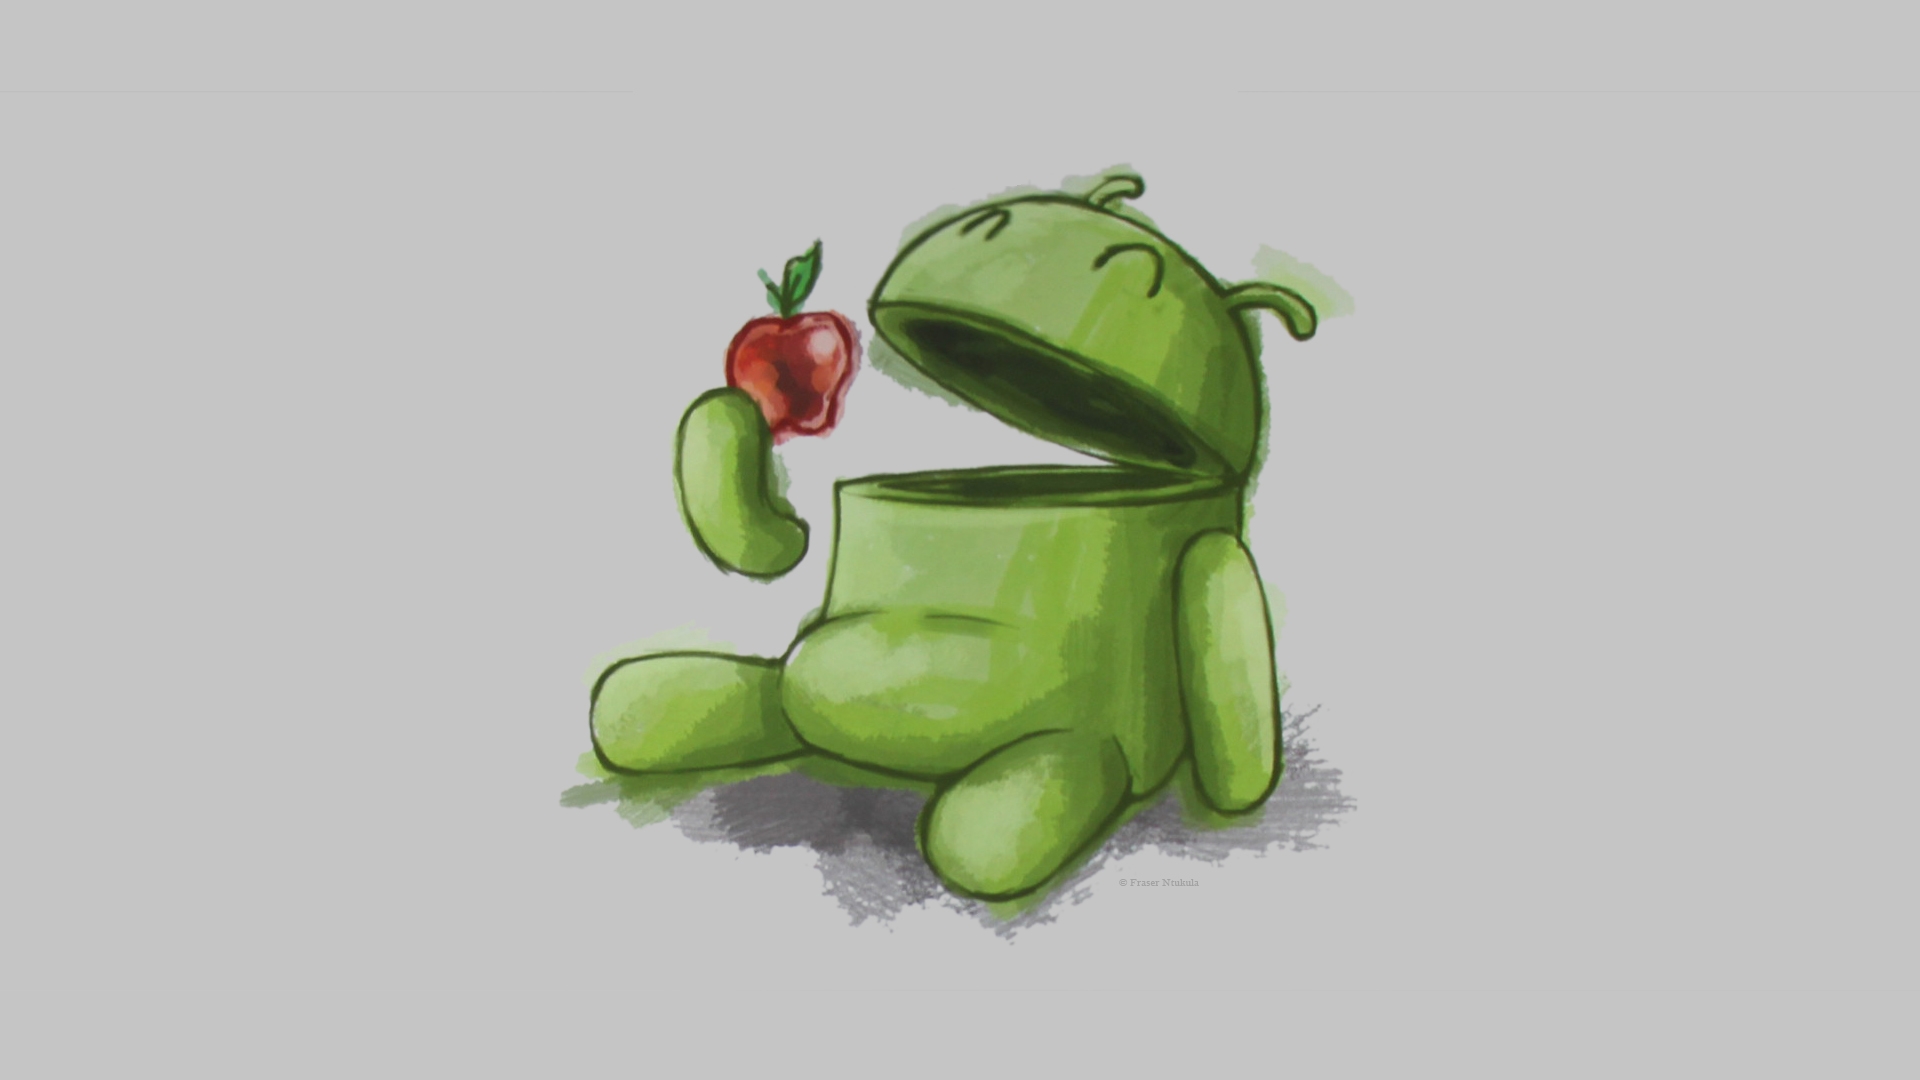 [39+] Android Eating Apple Wallpaper on WallpaperSafari